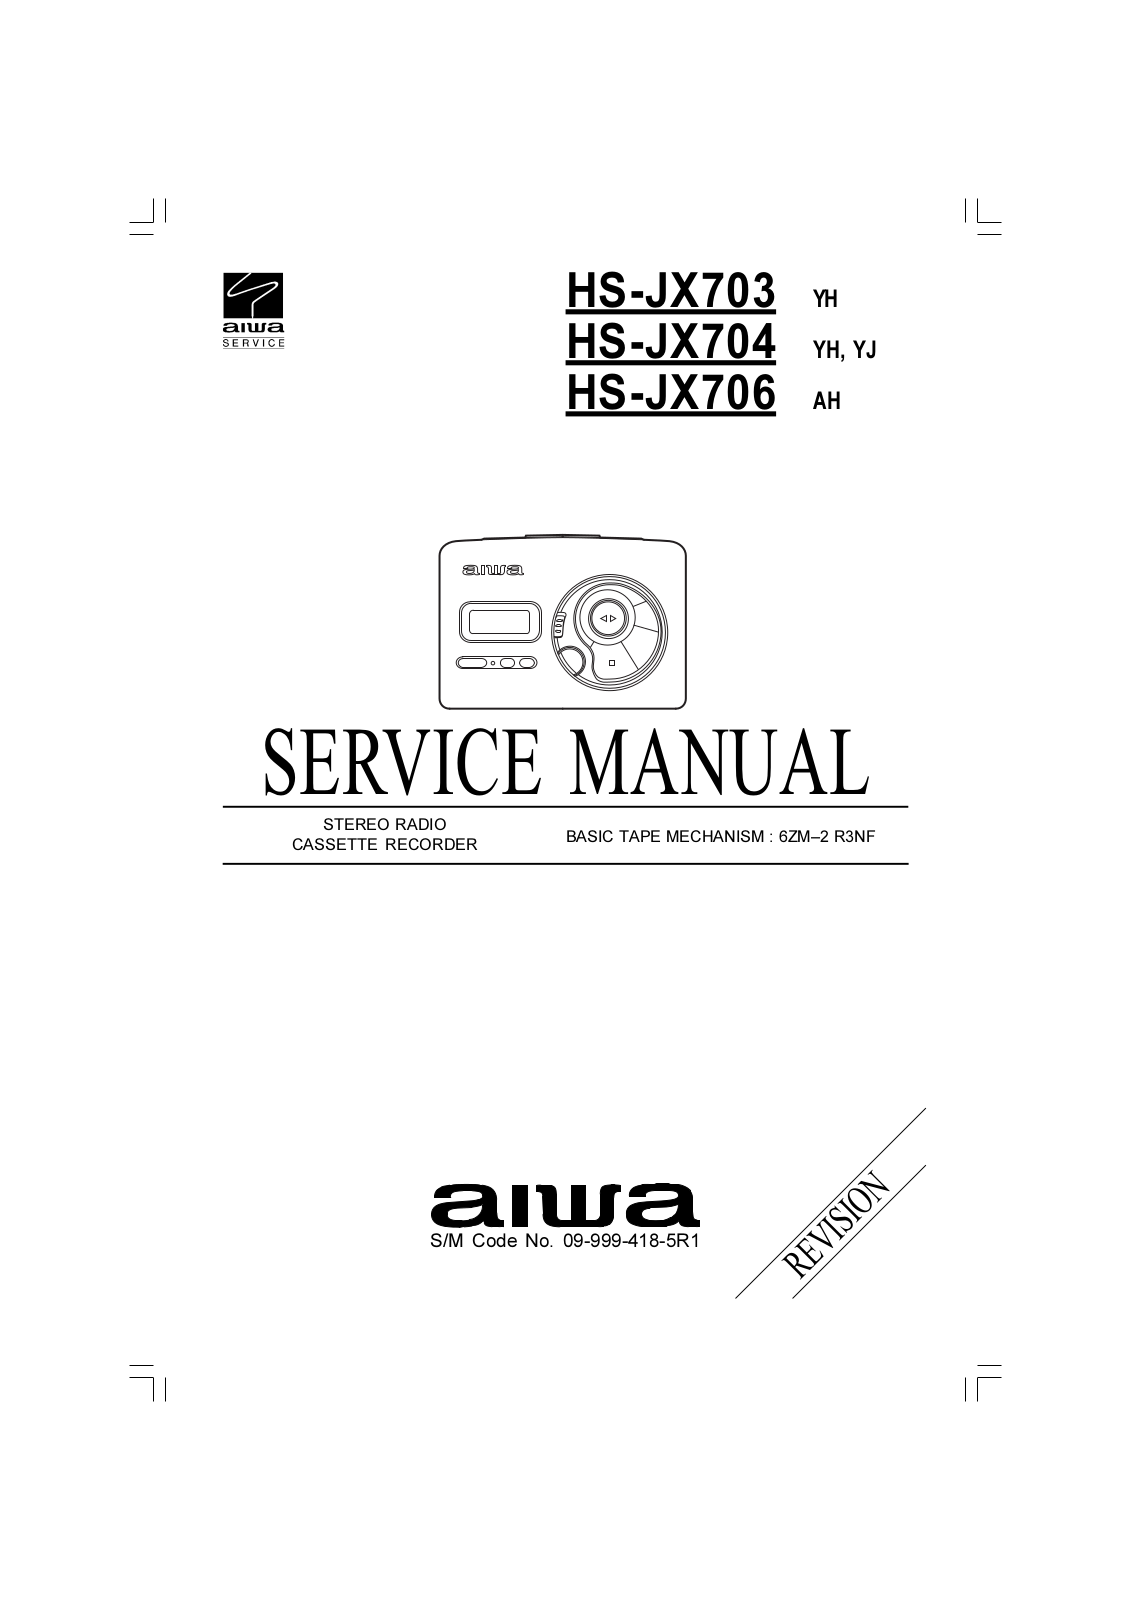 Aiwa HS-JX706 AH, HS-JX704 YJ, HS-JX704 YH, HS-JX703 YH Service Manual